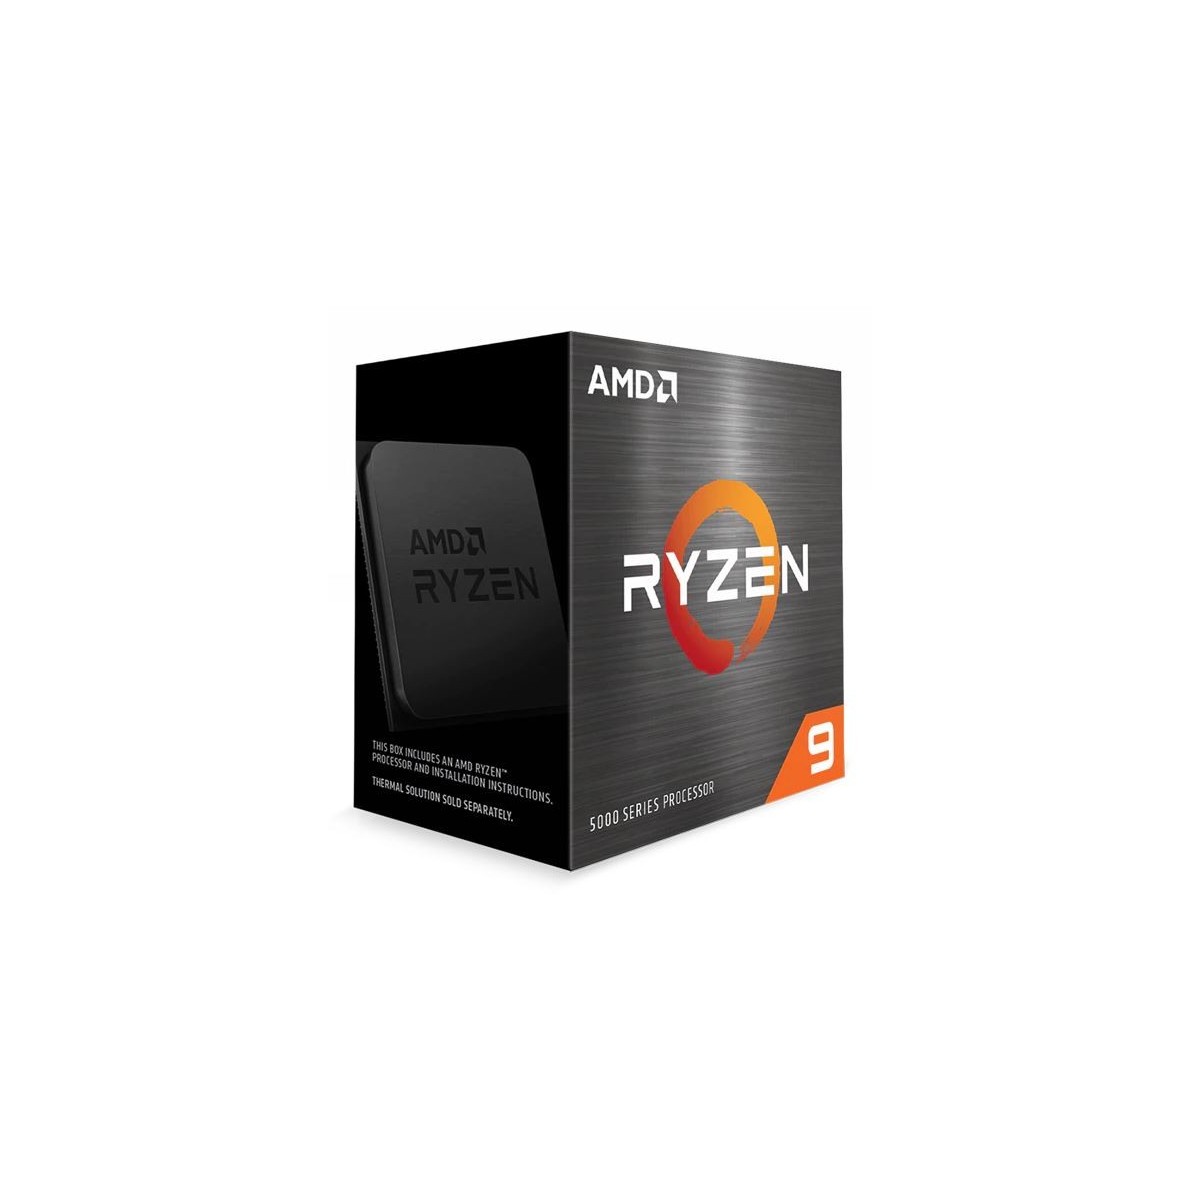 AMD Ryzen 9 5900X 12C/24T 3.7 GHz Box Sockel AM4 ohne Kühler - AMD R9 - 3.7 GHz